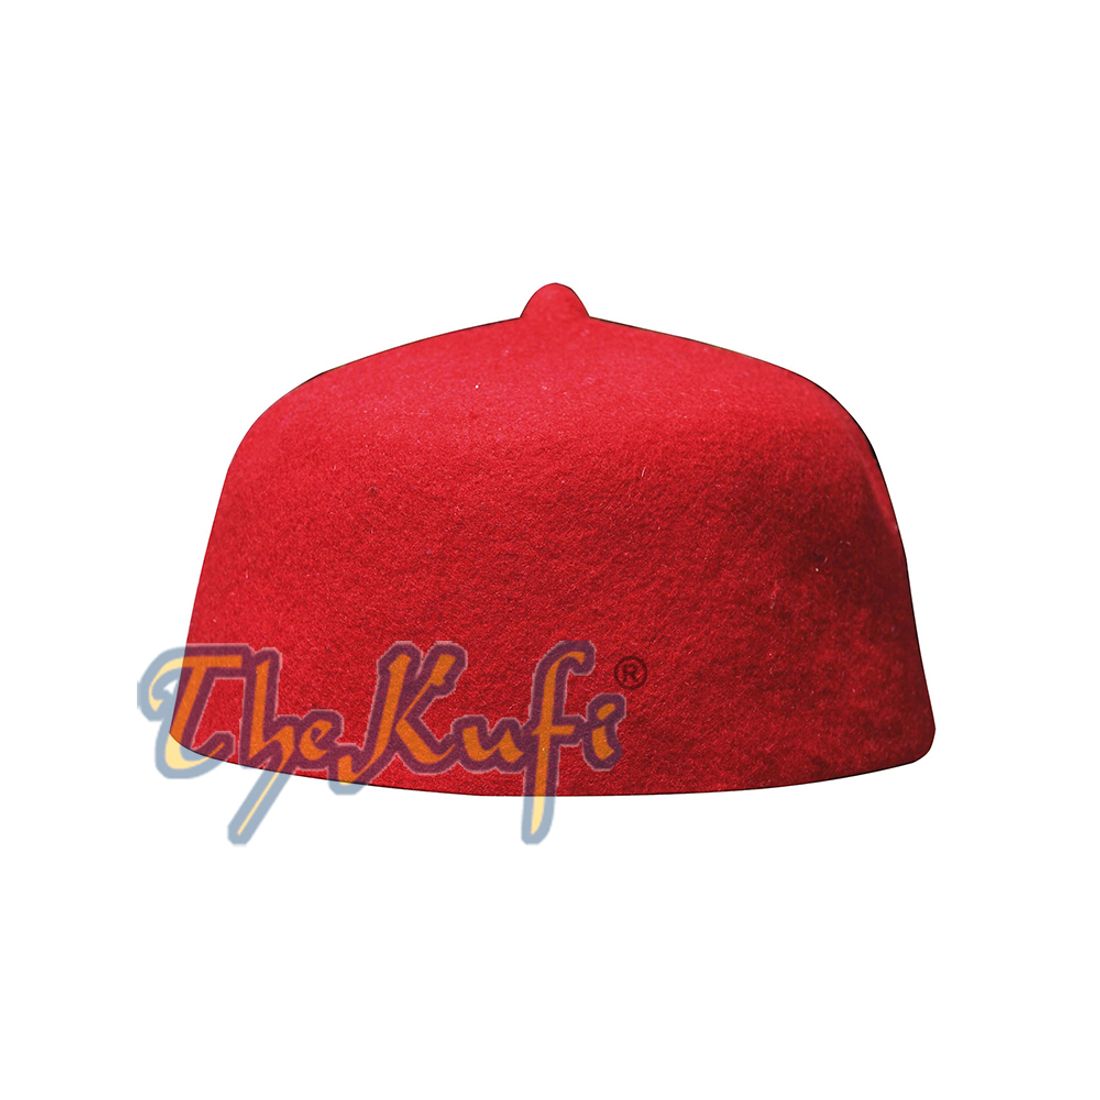 Red Felt Wool Fez Kids Kufi Prayer Hat with Tip